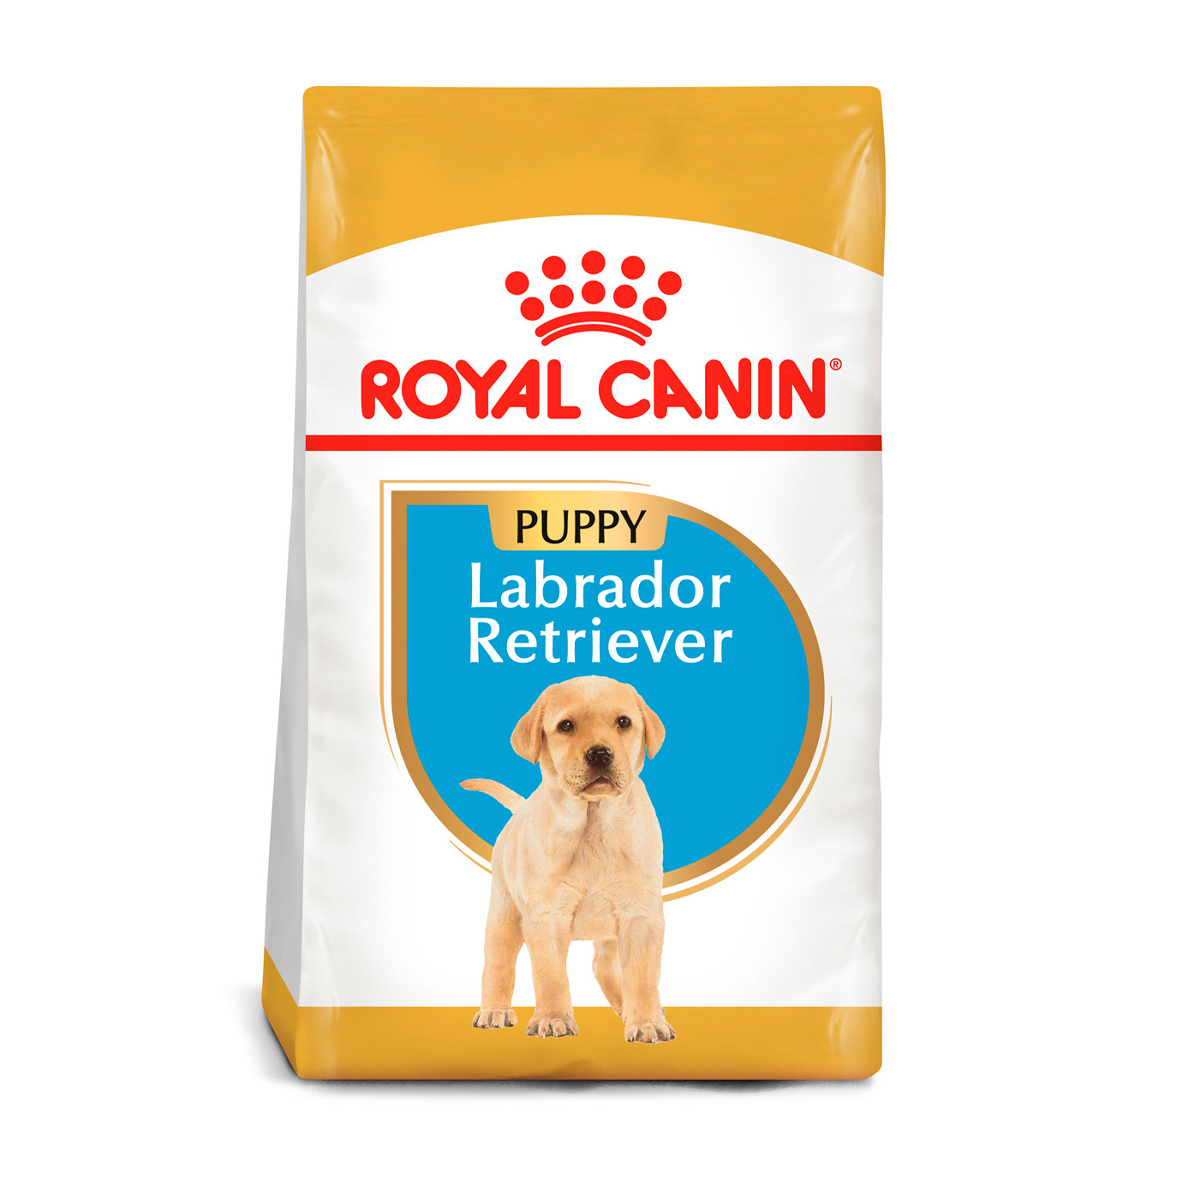 Royal Canin Alimento Seco para Cachorro Raza Labrador Retriever, 13.6 kg